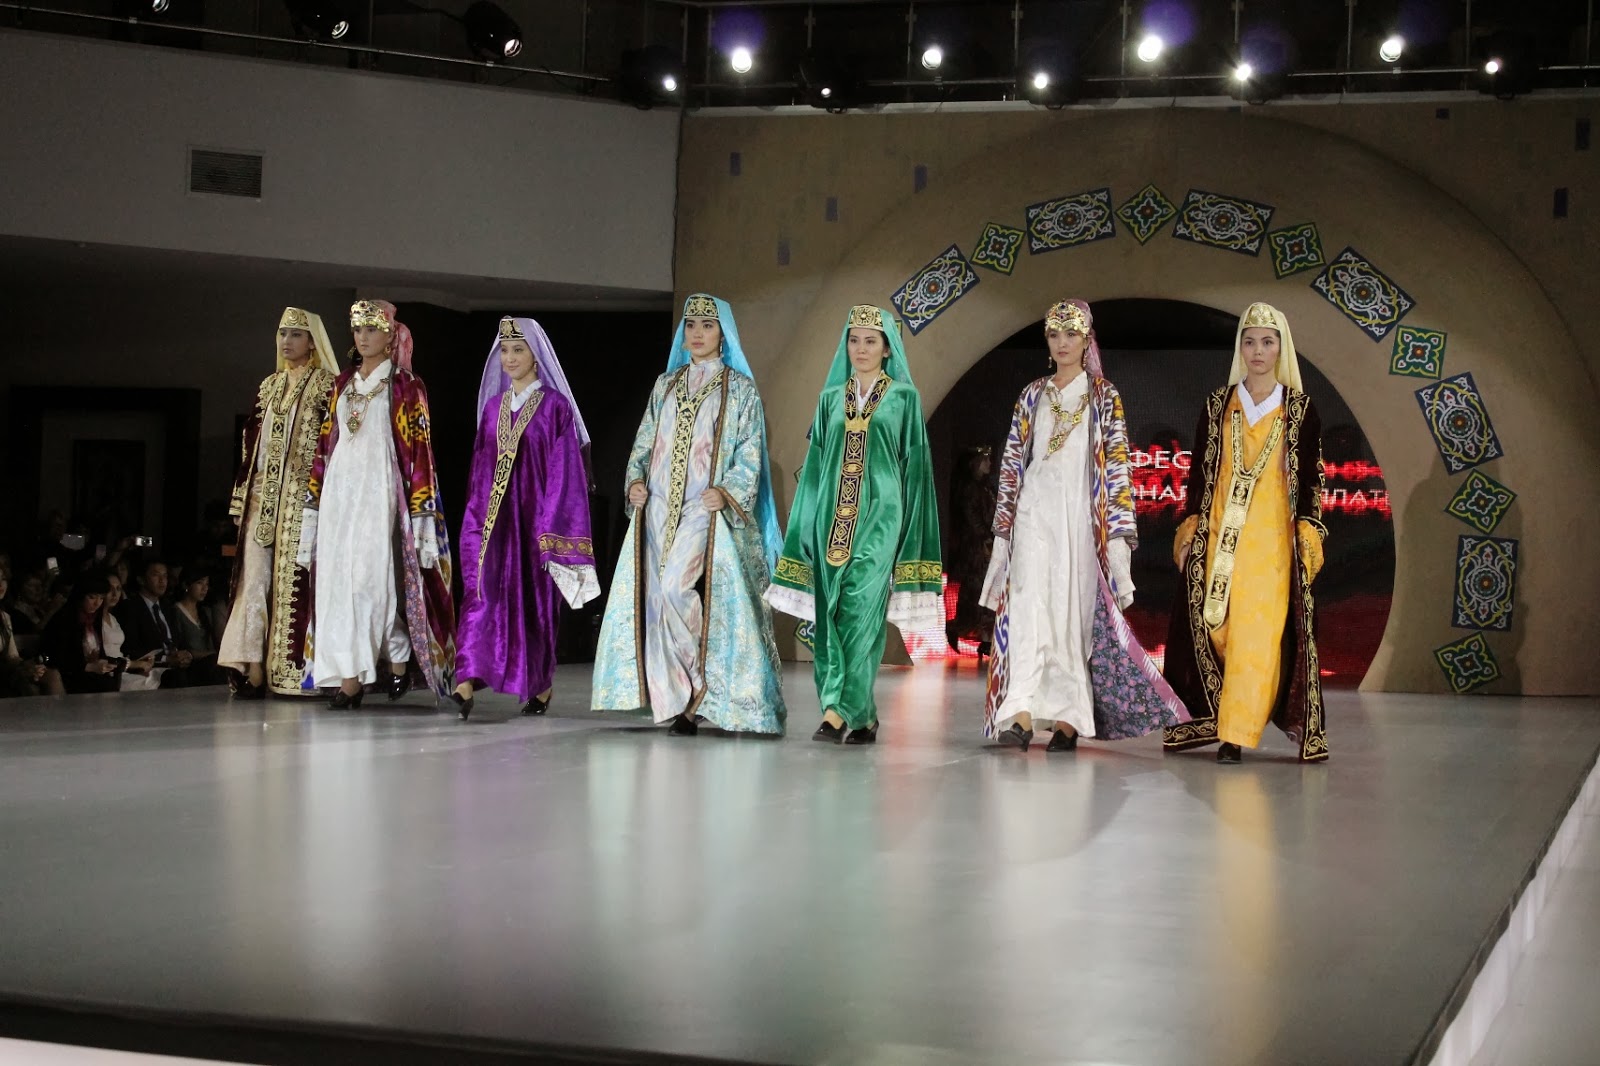 Костюм ташкент. Самарканд Национальная женская одежда. Национальный костюм Самарканда. Национальная одежда Самарканда. Националь костюм Узбекистана.